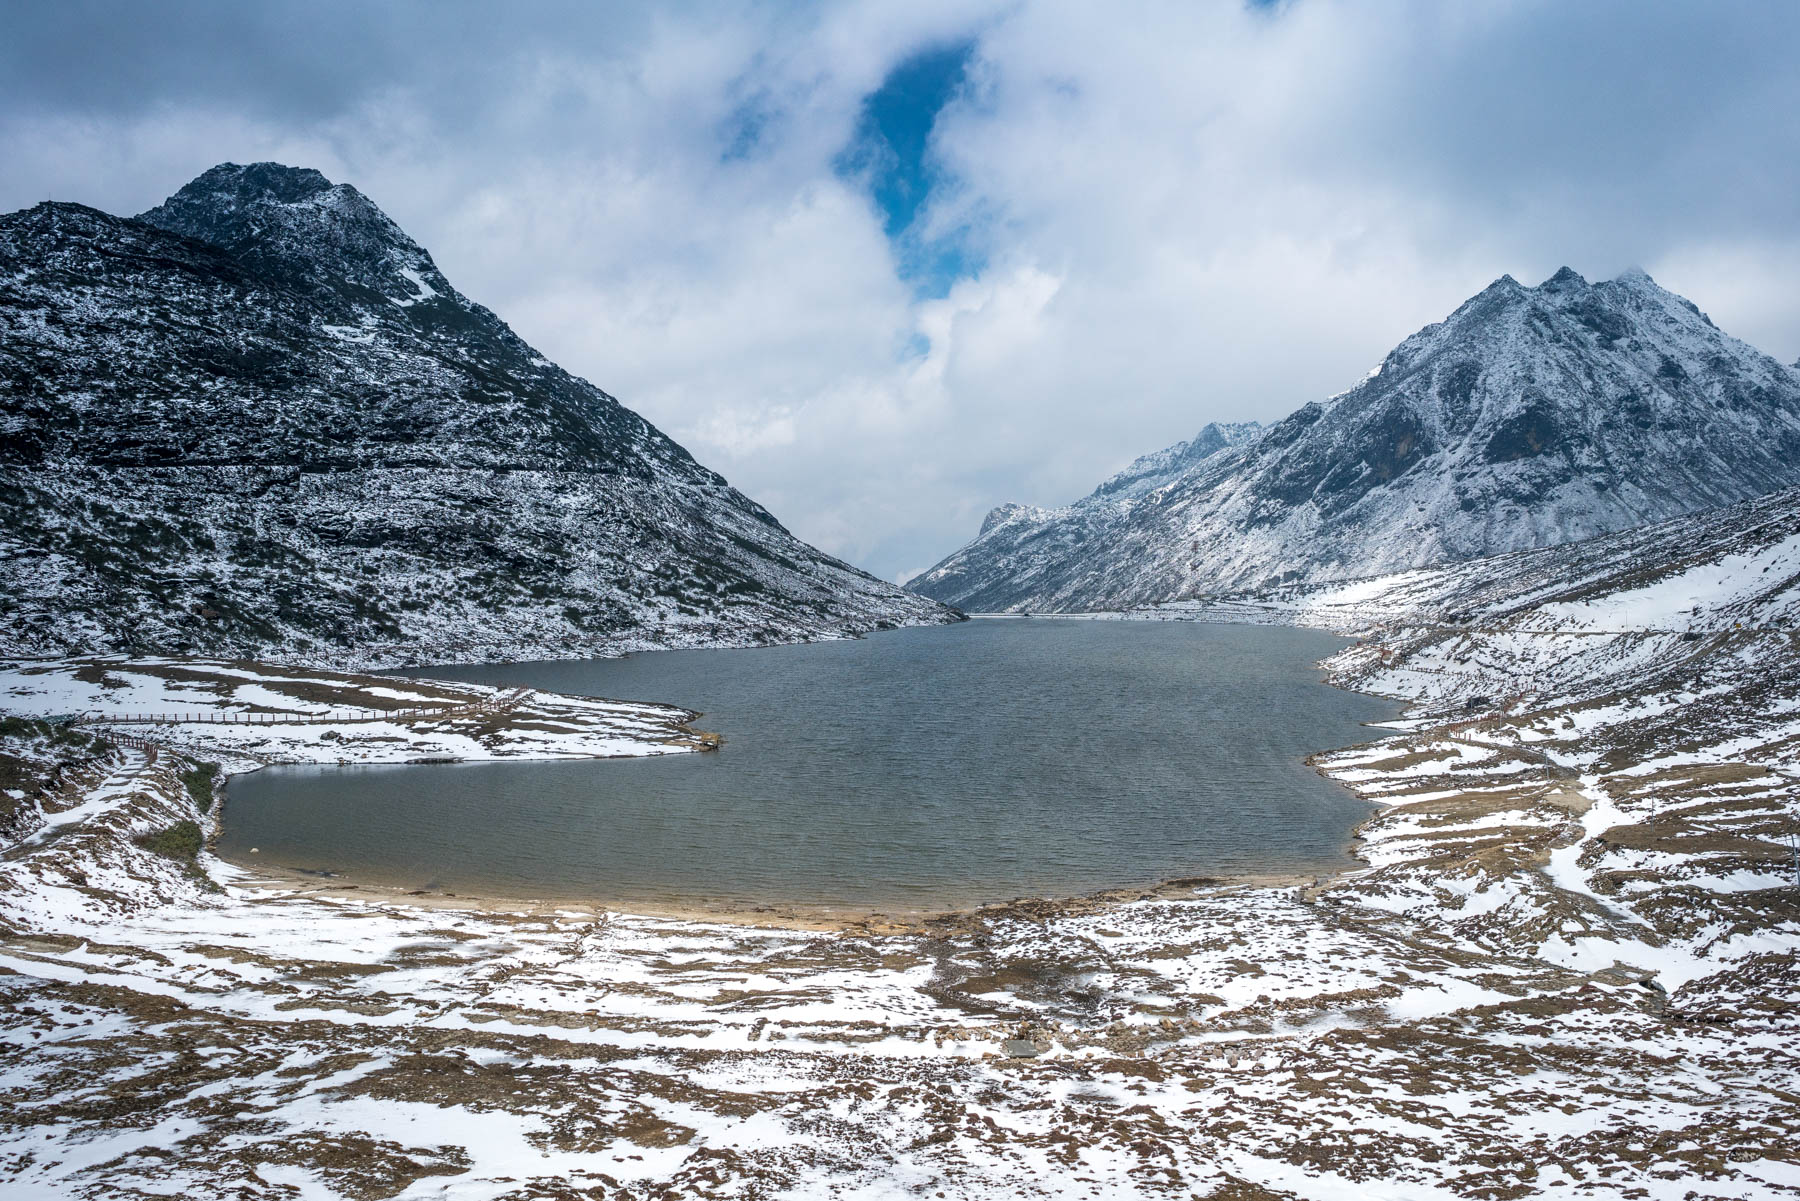 Backpacking Arunachal Pradesh travel guide - Sela Pass lake - Lost With Purpose